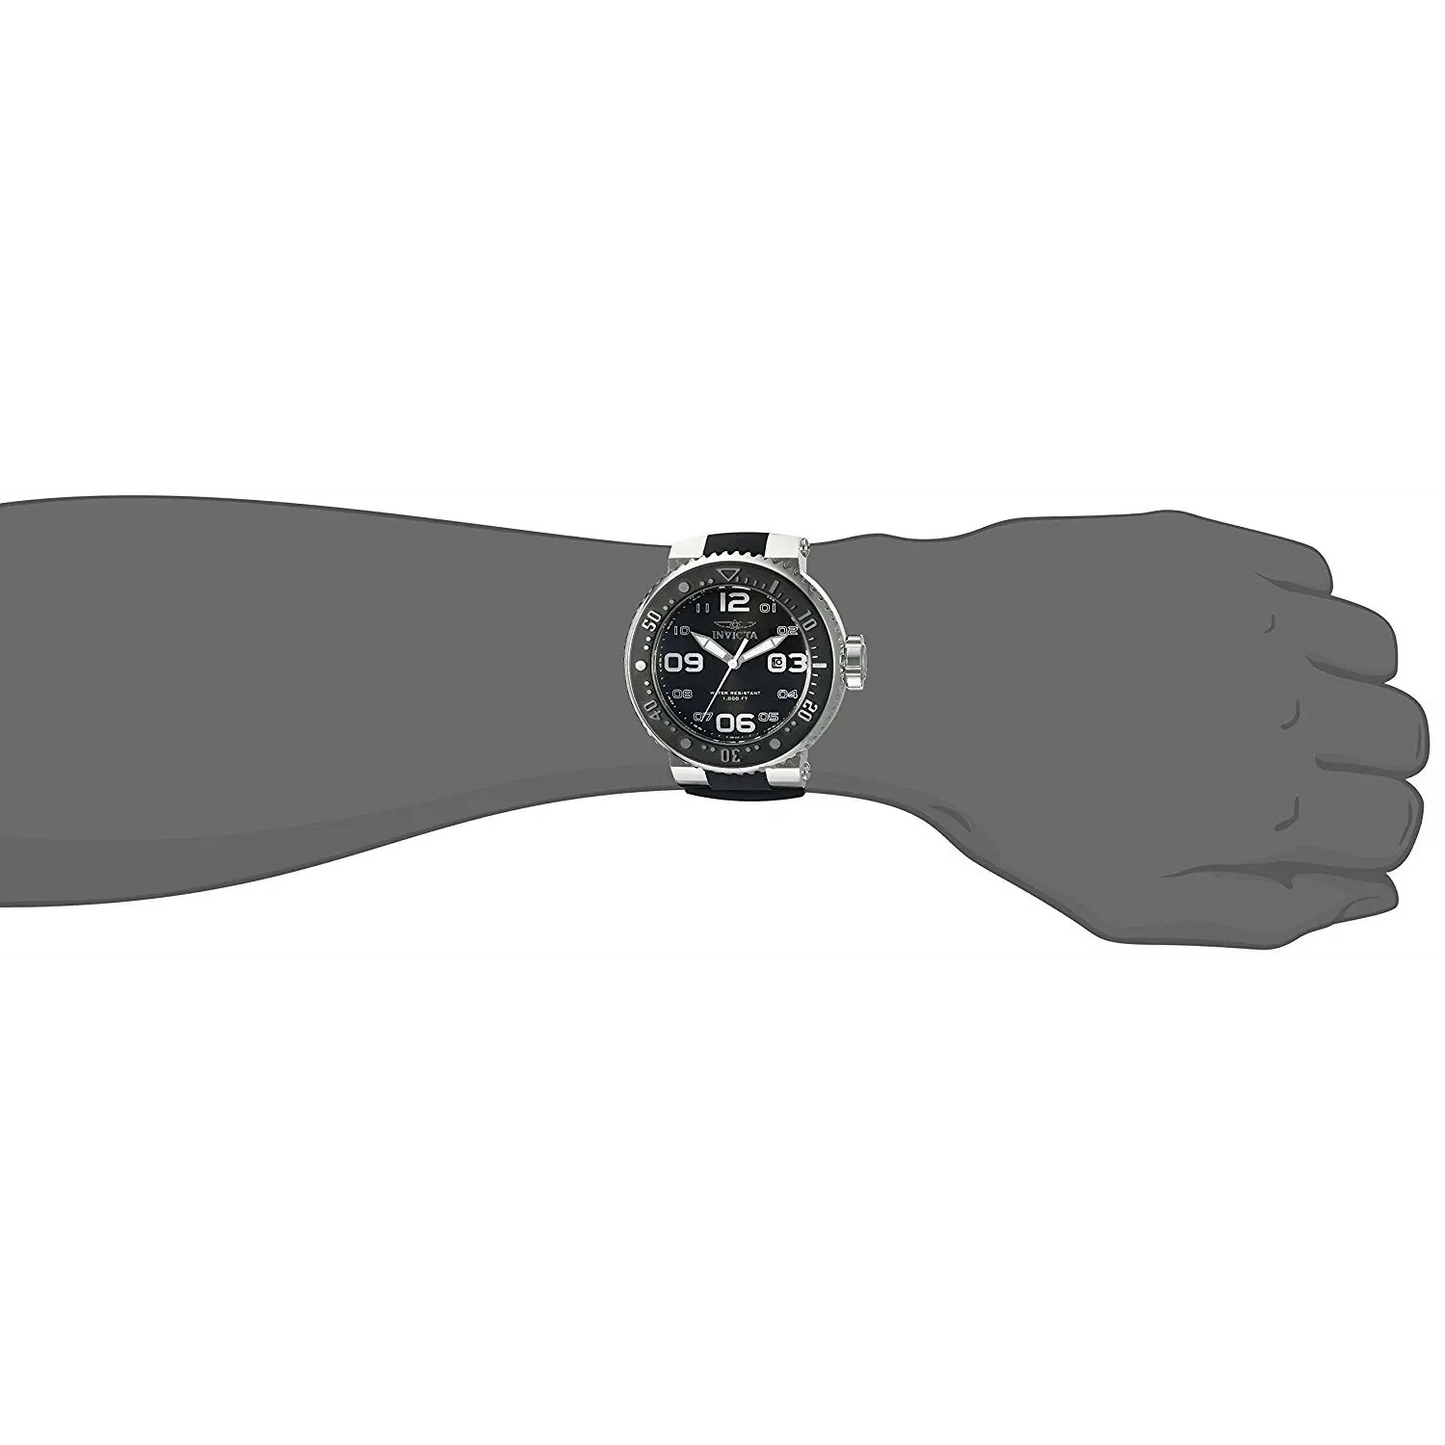 Invicta Men’s 21518 Pro Diver Quartz 3 Hand Black Dial Watch